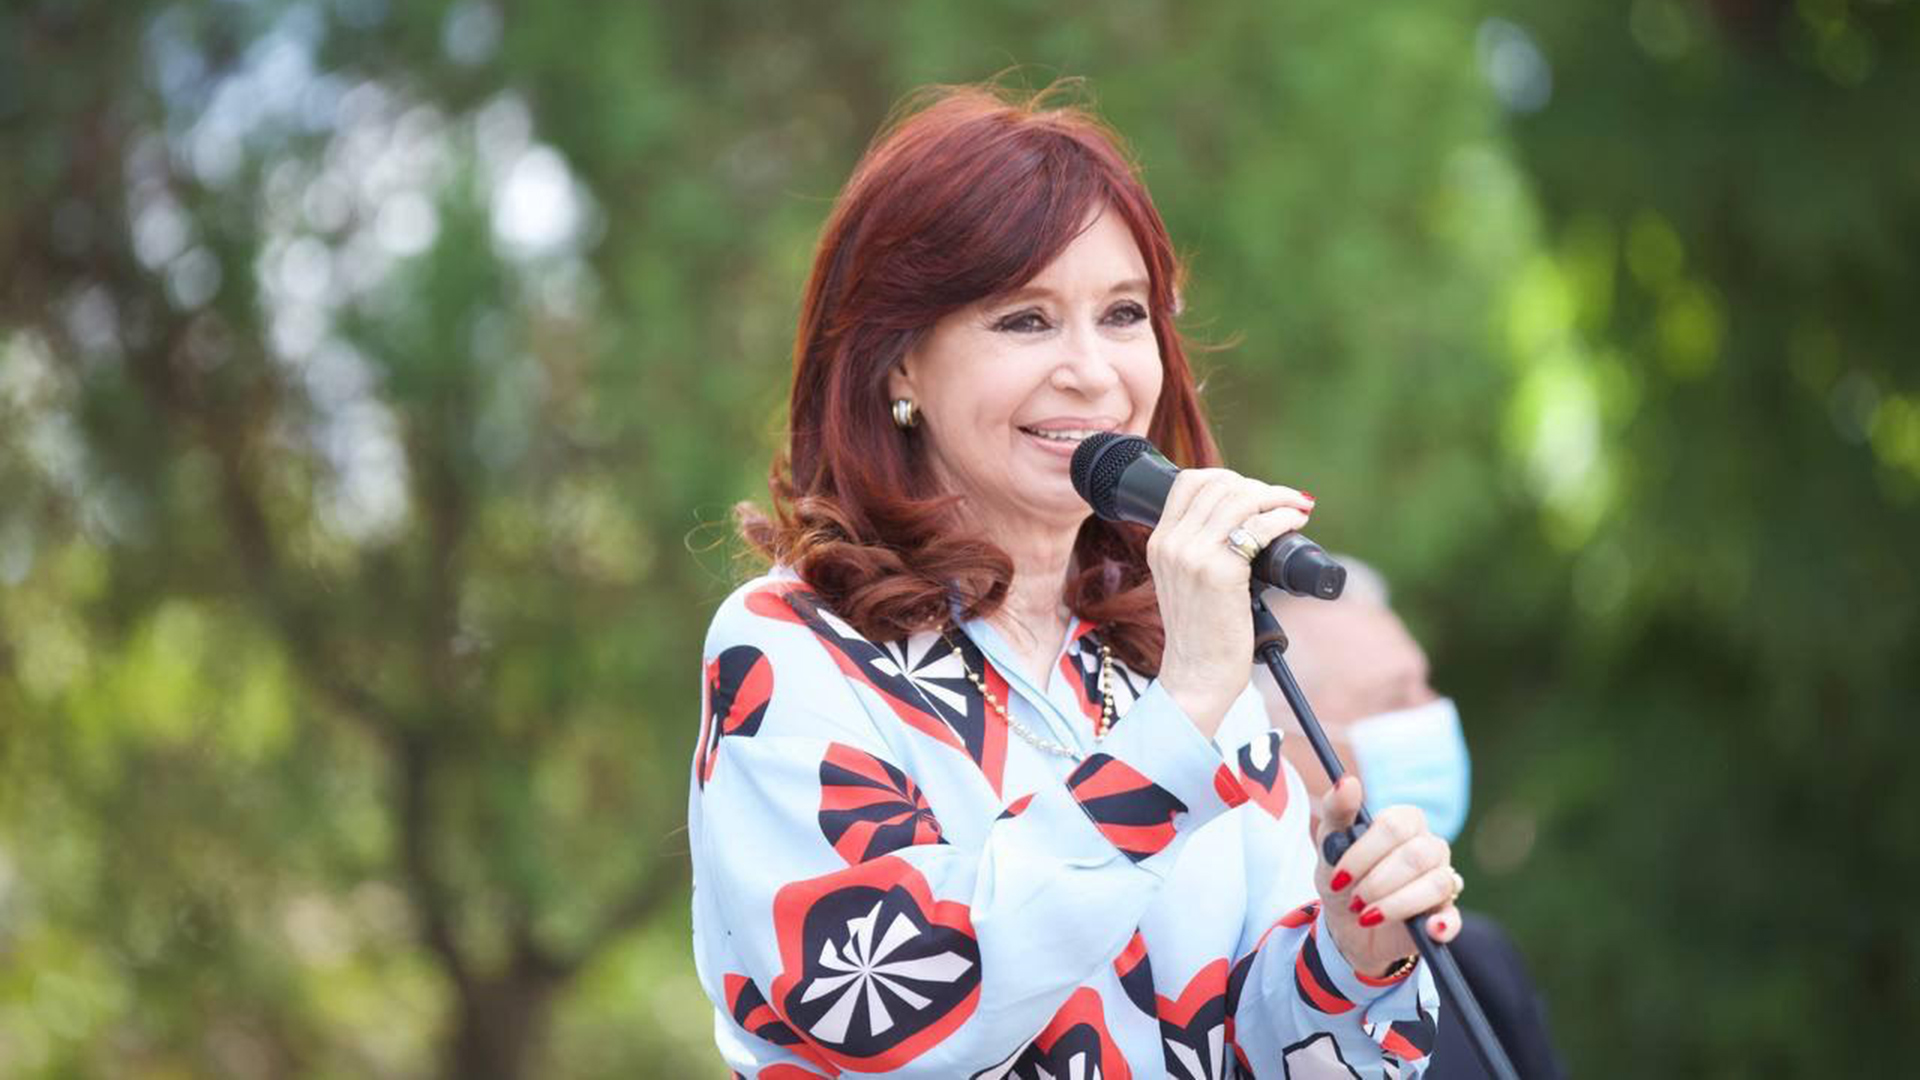 Renakuajo on X: Cristina Kirchner, la “madre de todos los pobres